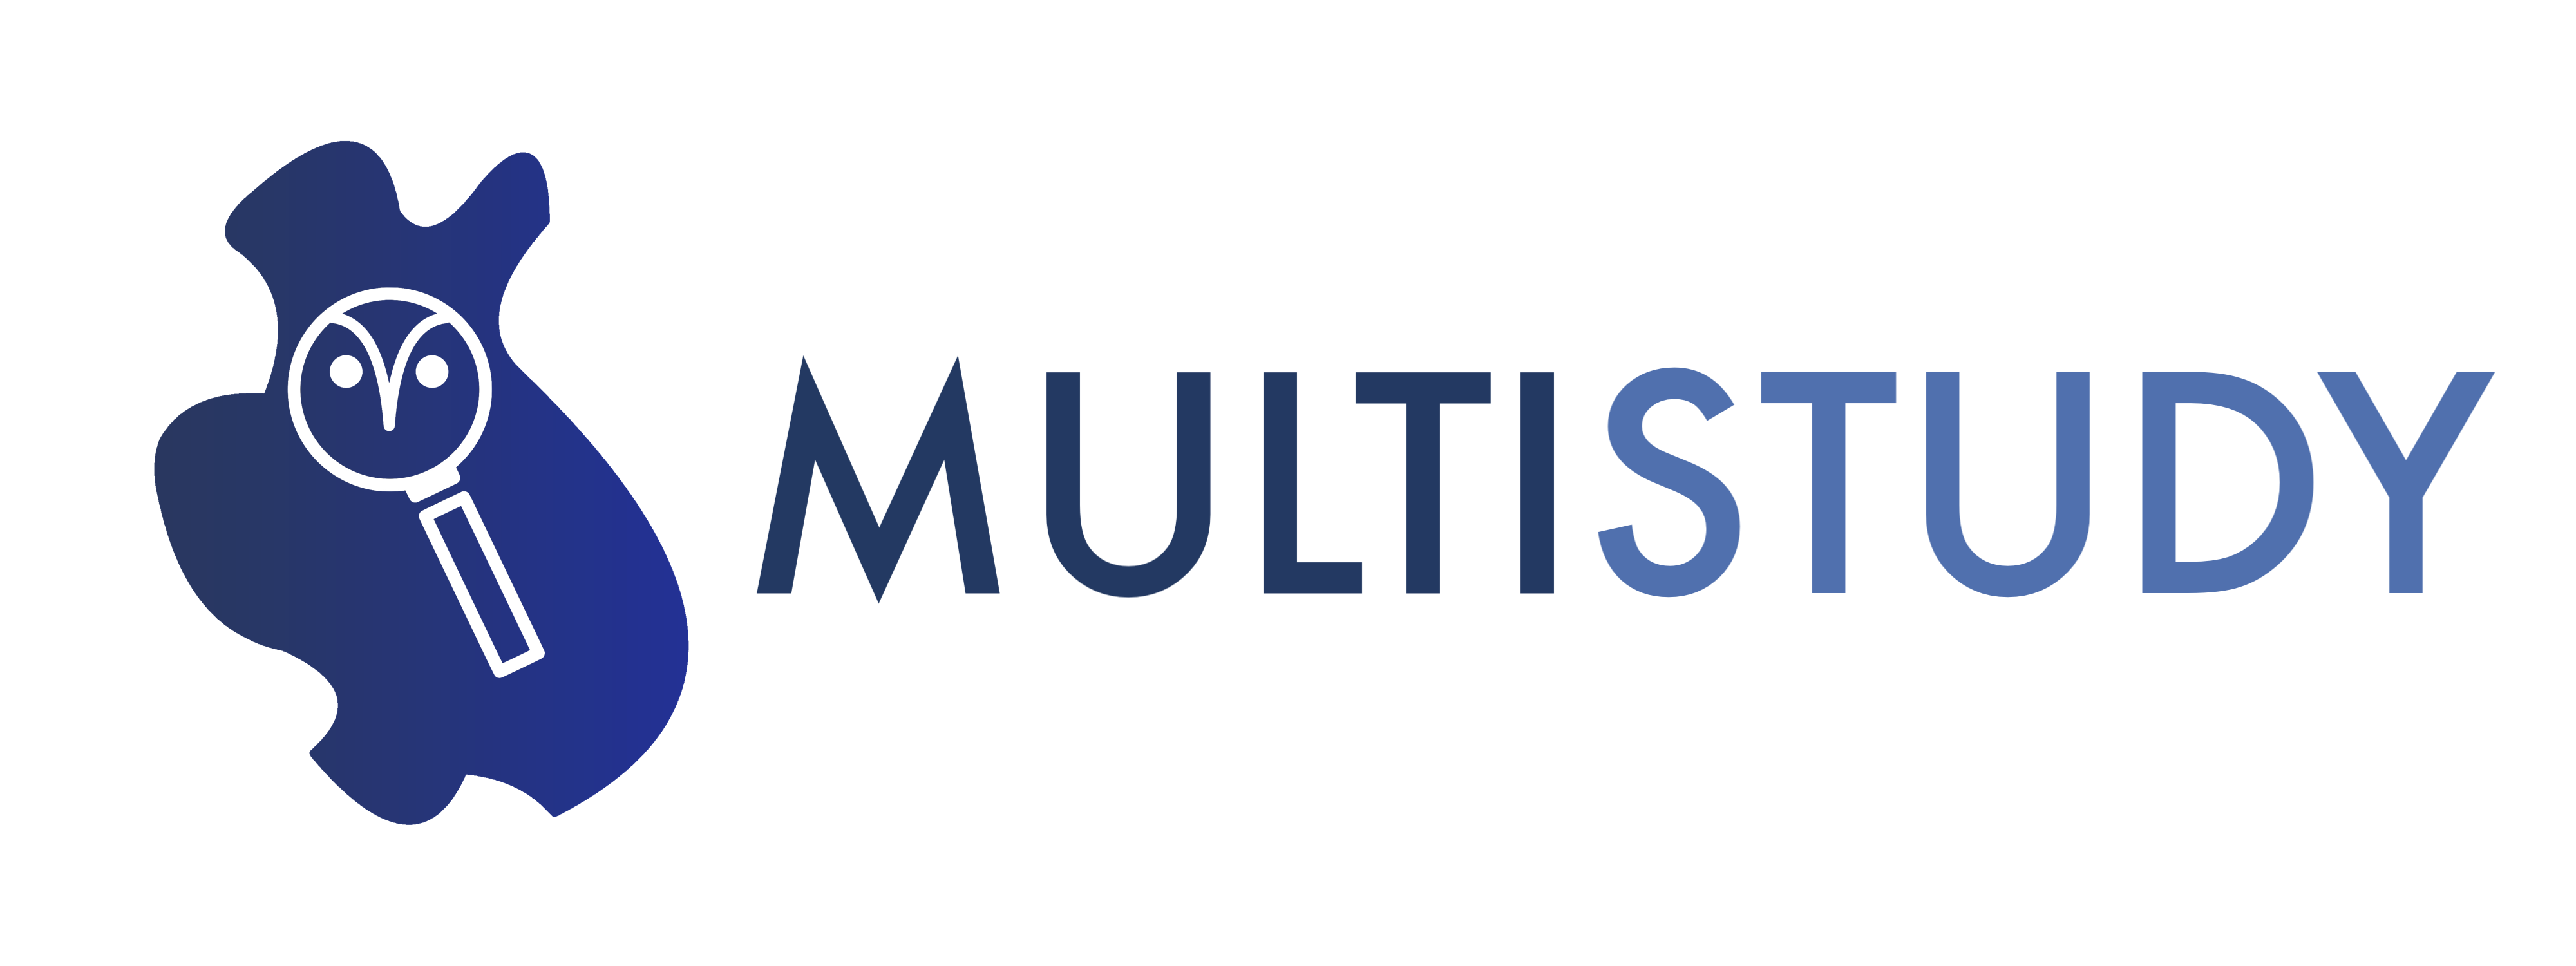 Multistudy Logo